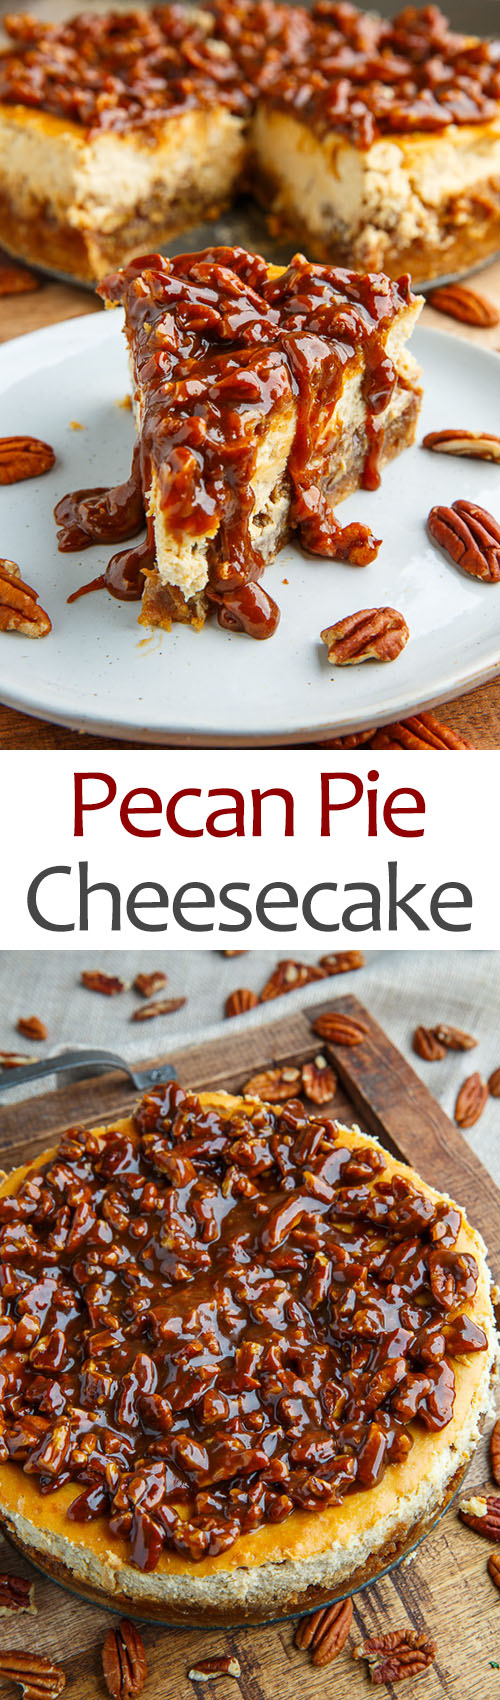 Pecan Pie Cheesecake with Pecan Caramel Sauce